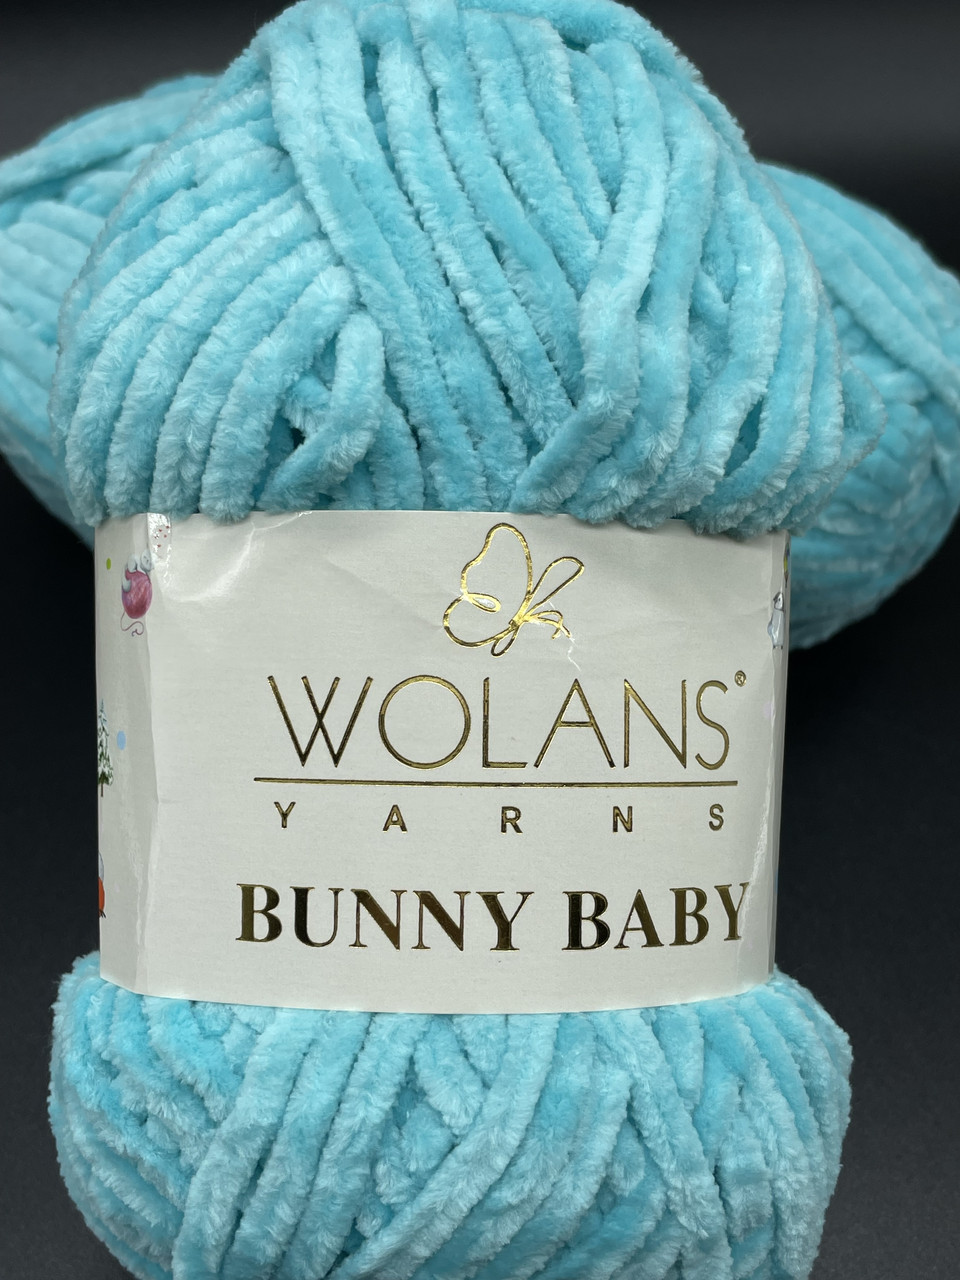 Bunny Baby Wolans Yarns-13